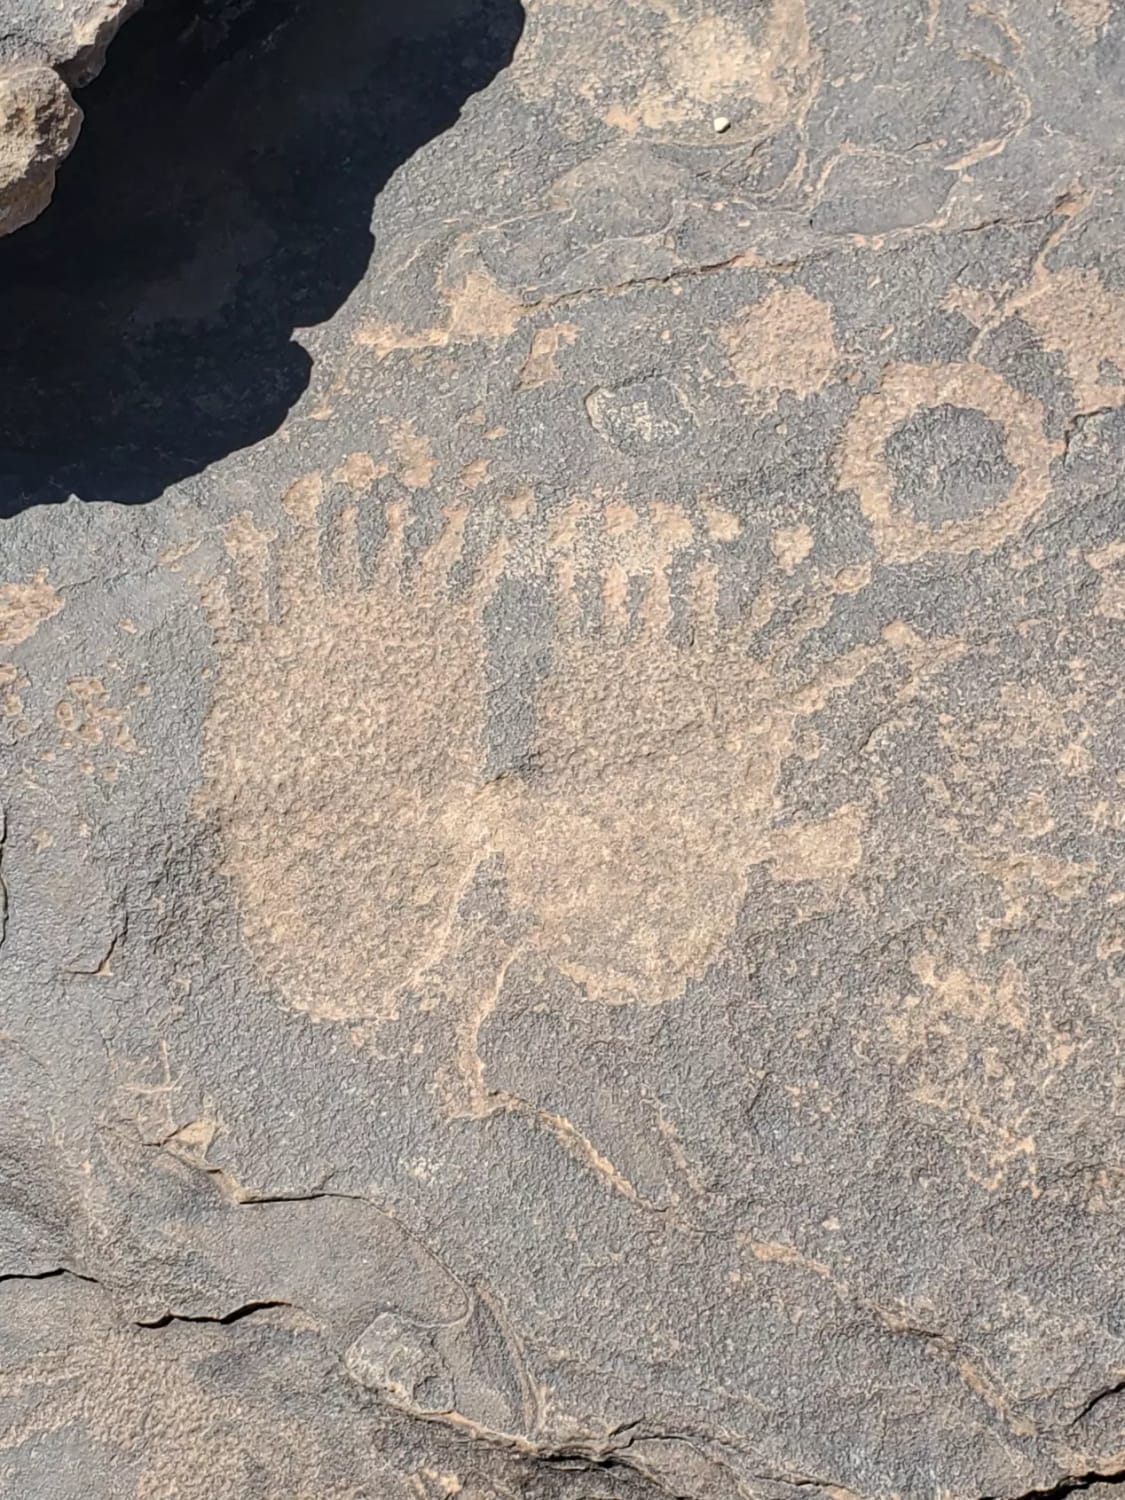 Puebloan Petroglyphs from Southern Utah